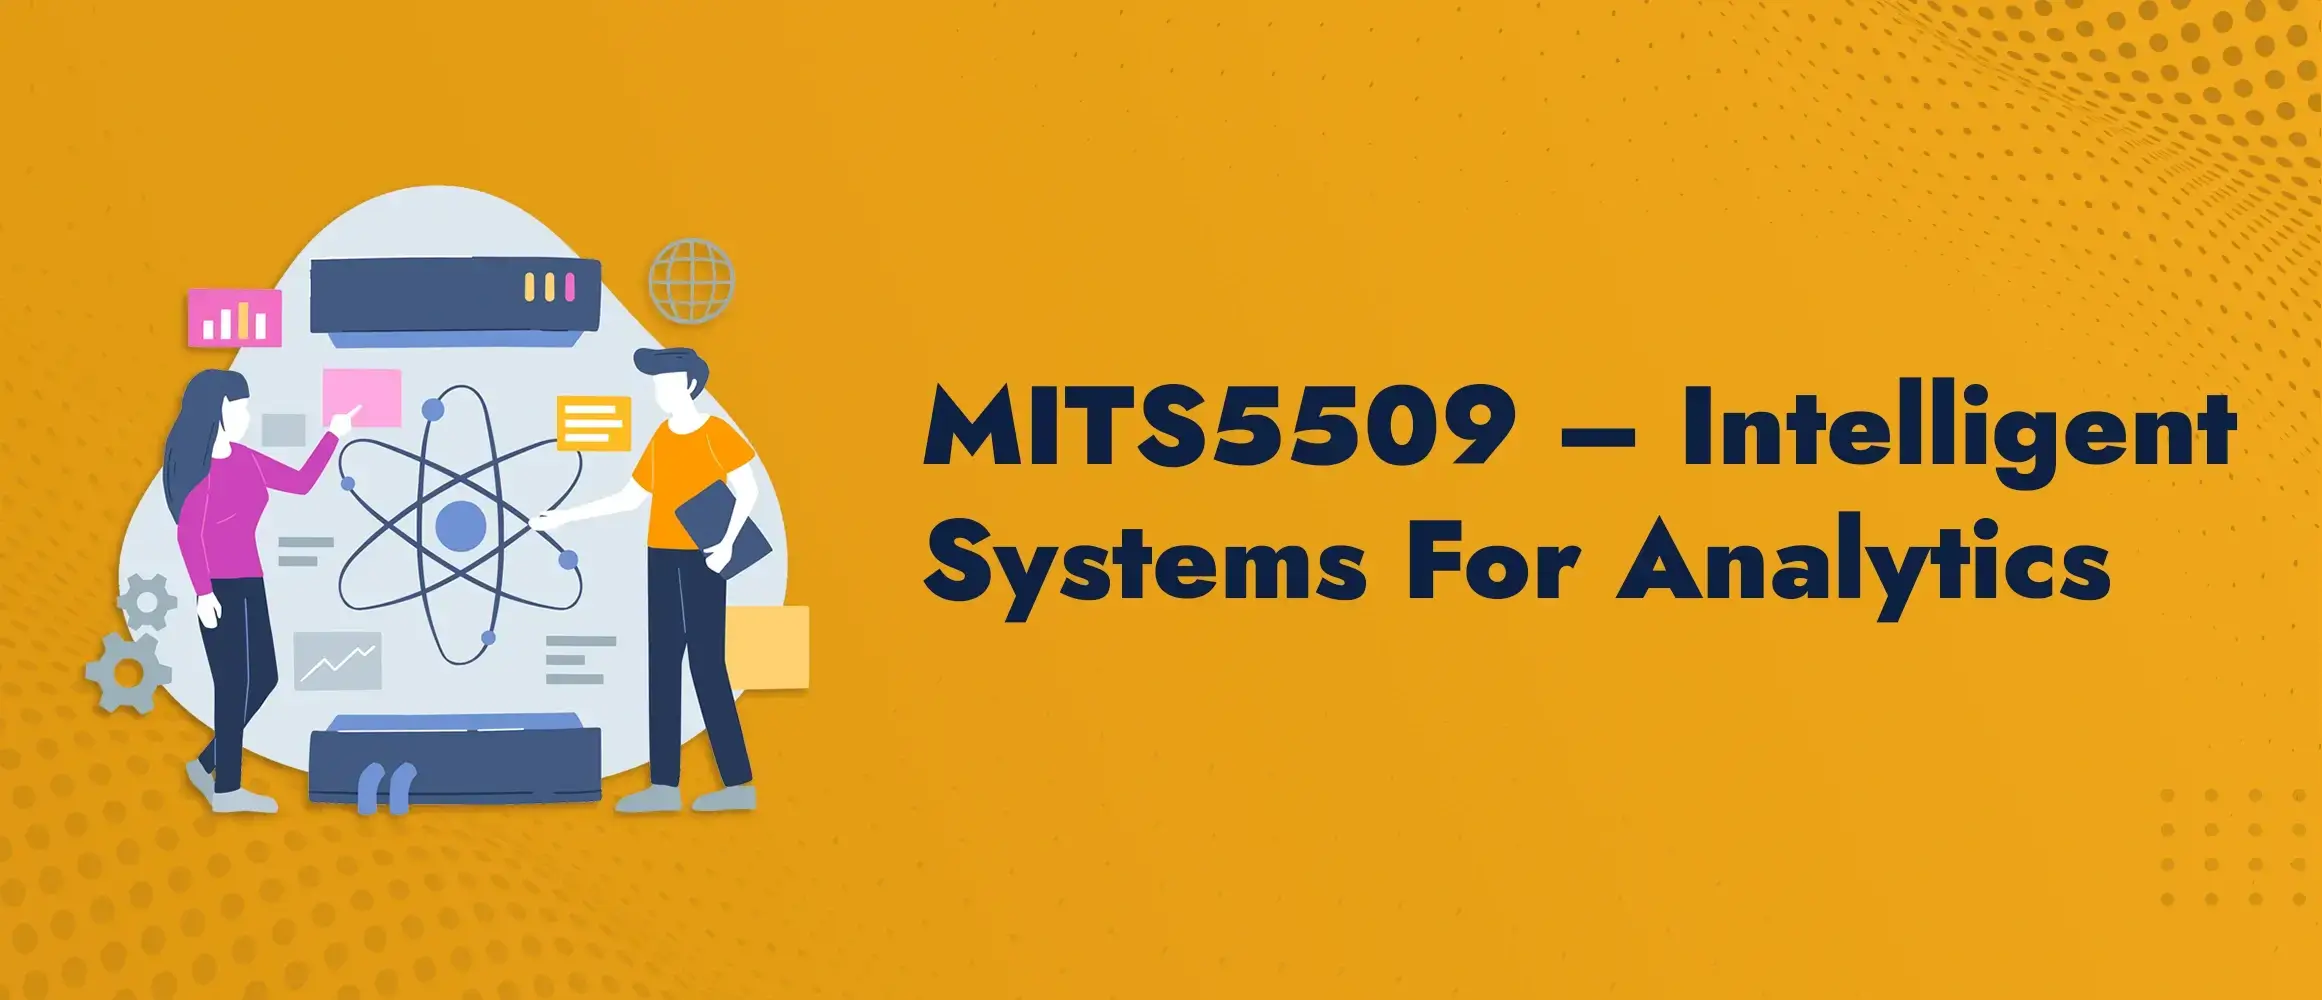 MITS5509 Intelligent Systems For Analytics